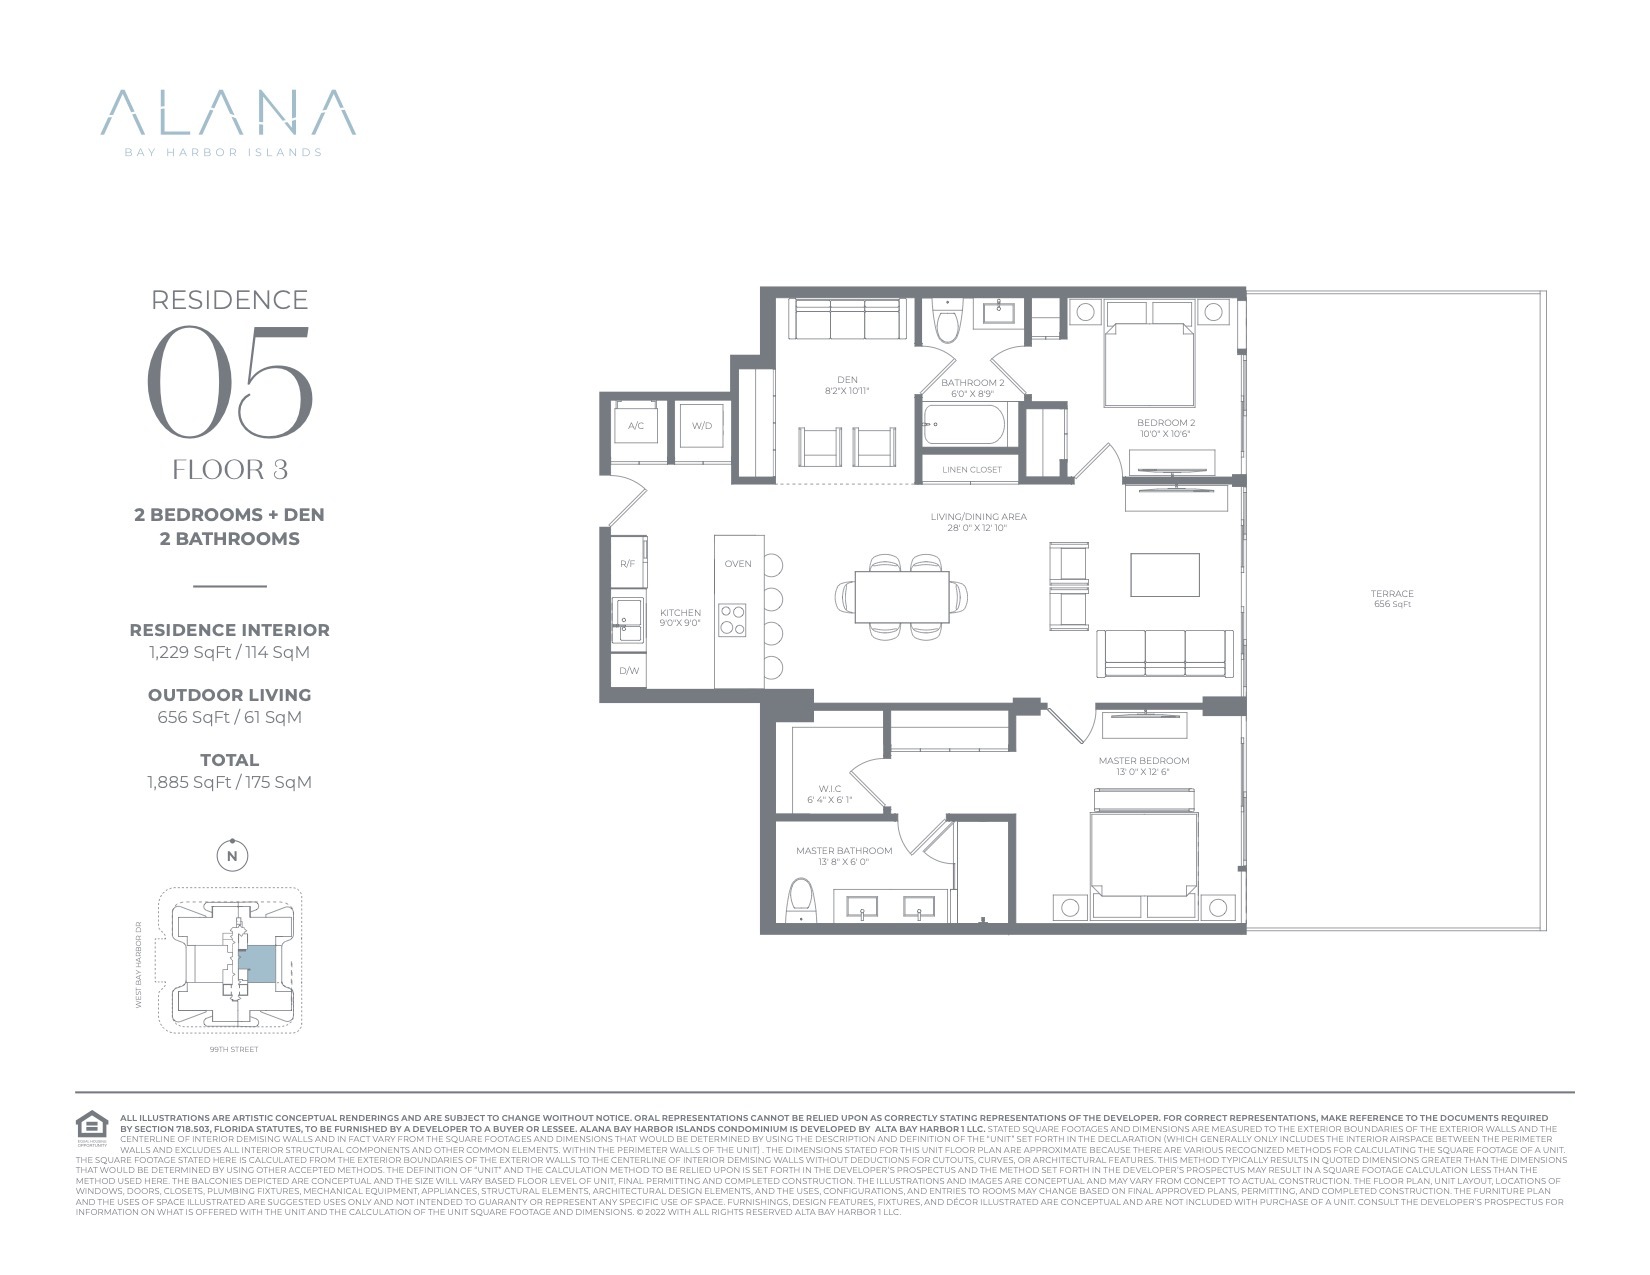 Floor Plan for Alana Bay Harbor Island Floorplans, Residence 05